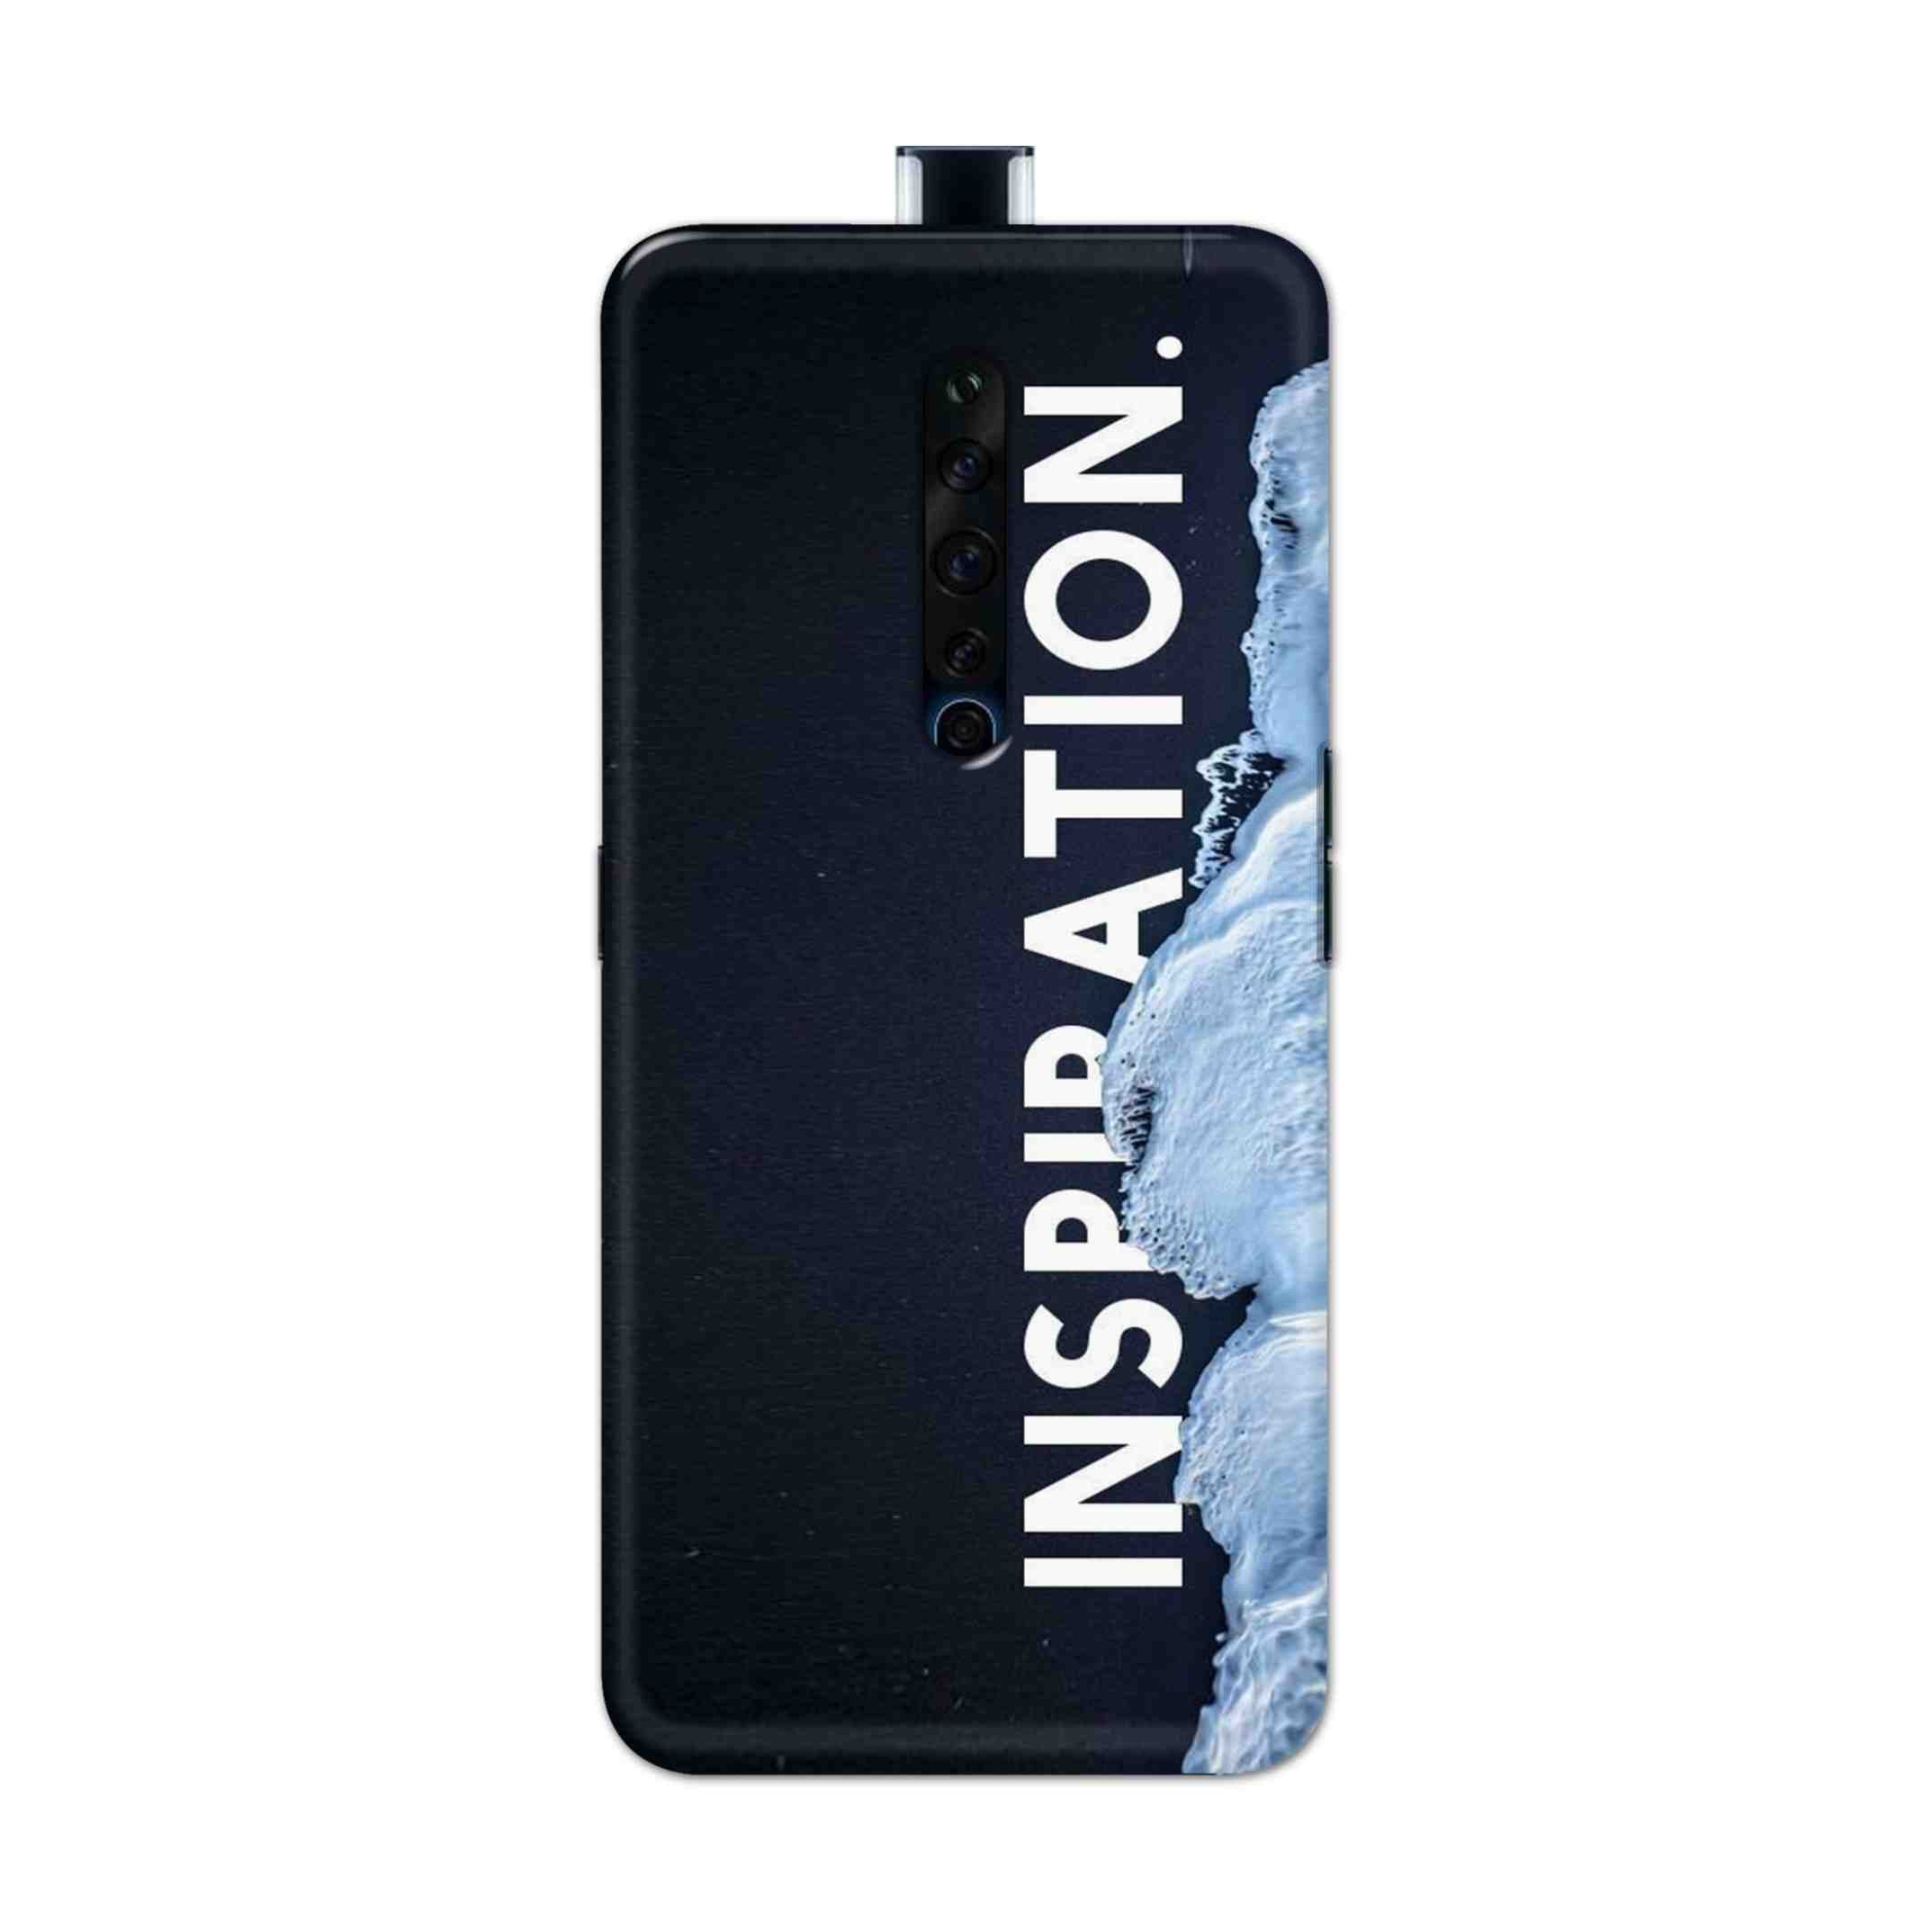 Buy Inspiration Hard Back Mobile Phone Case Cover For Oppo Reno 2Z Online